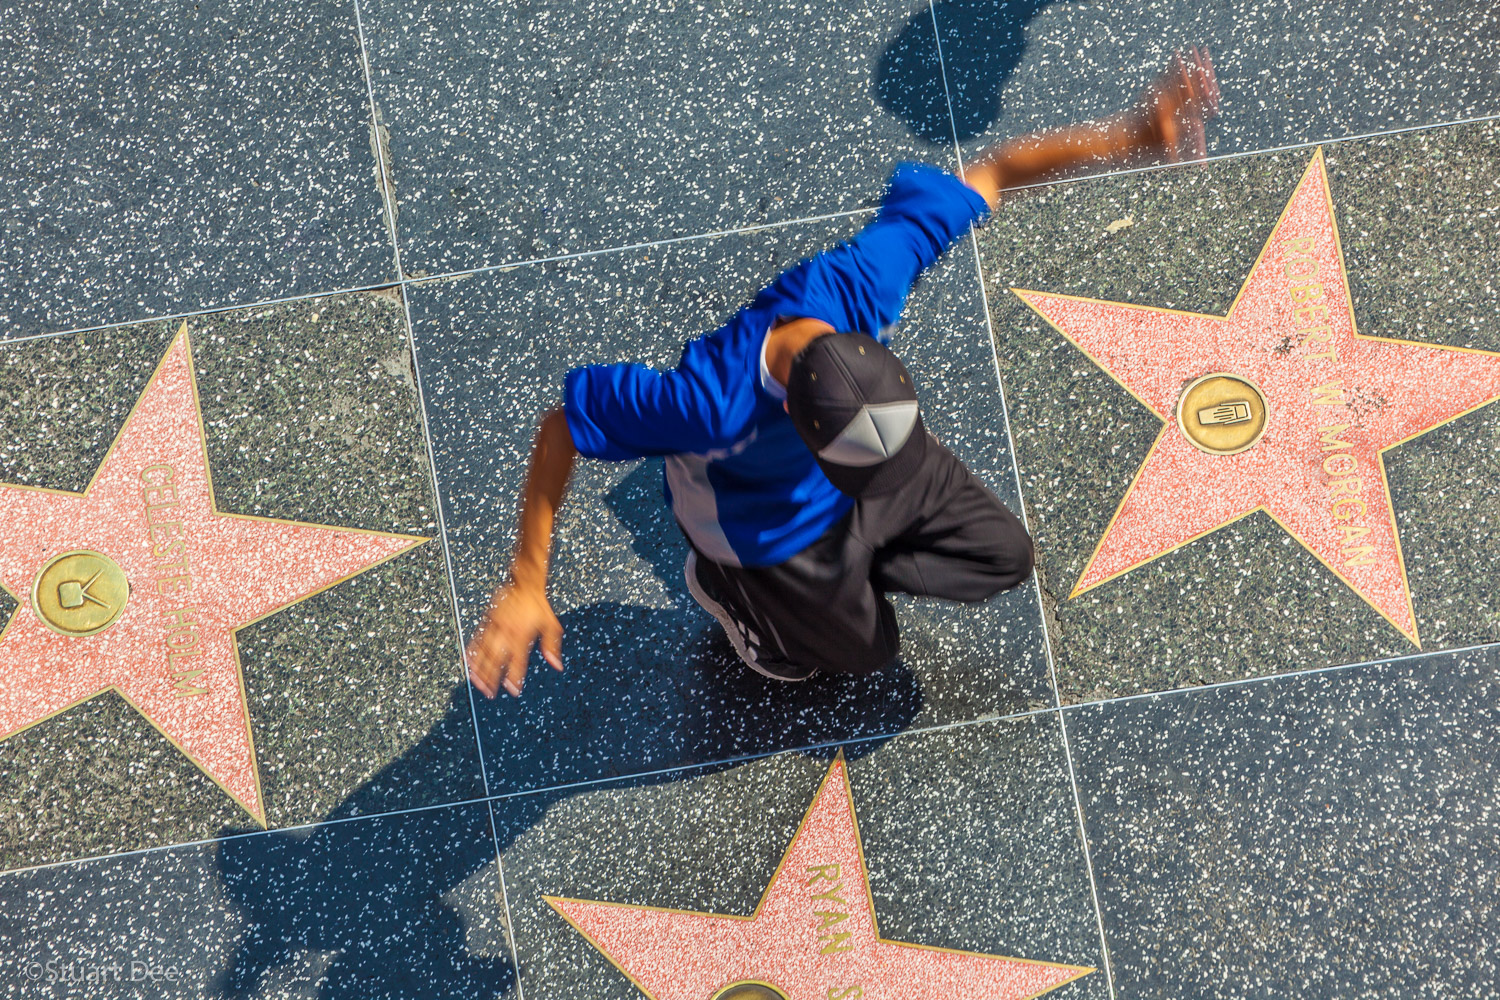  Hollywood Walk of Fame, Los Angeles, California, USA 